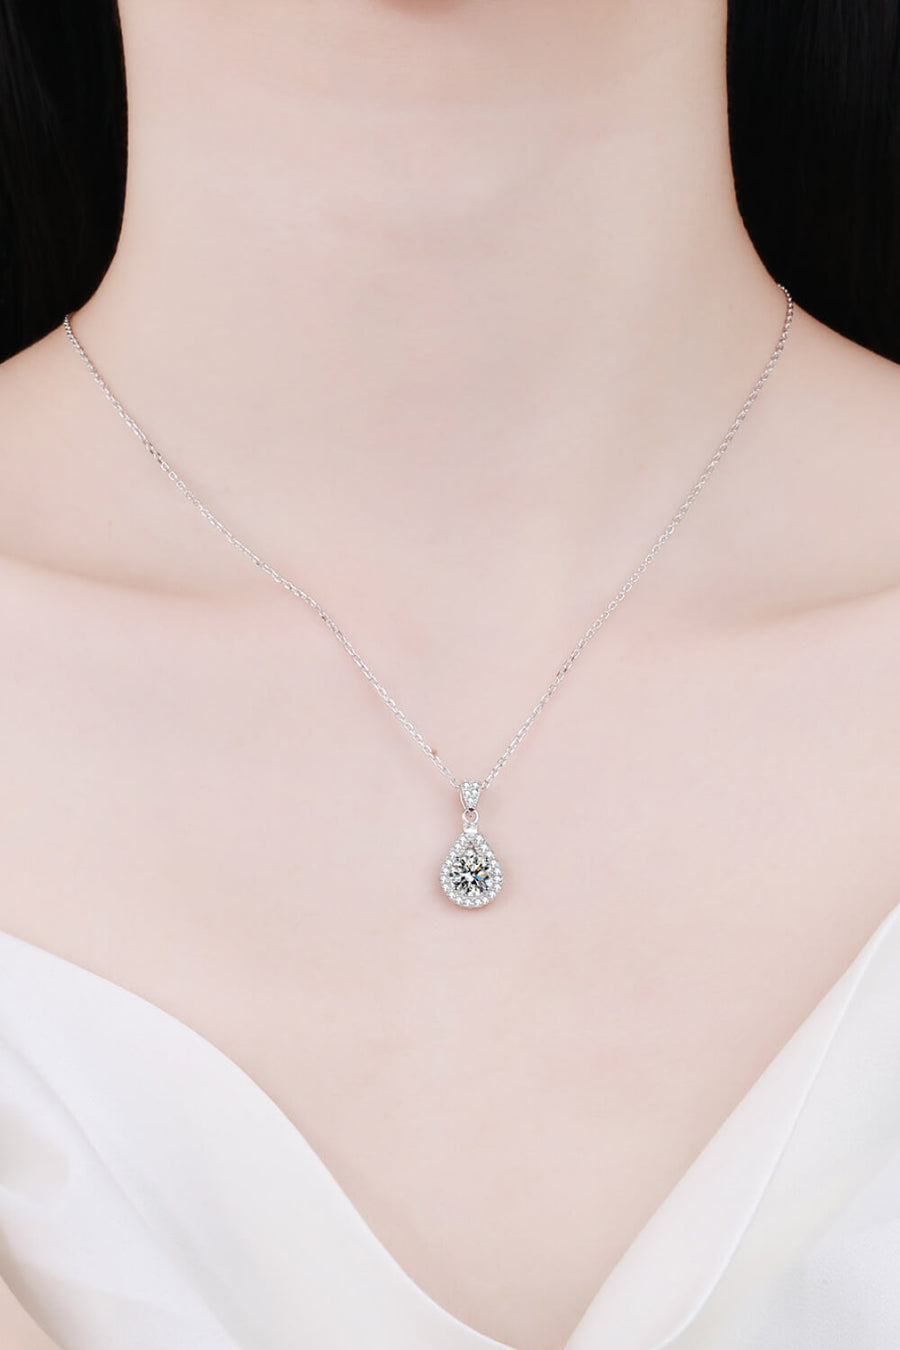 1# BEST Diamond Pendant Necklace Jewelry Gifts for Women | #1 Best Most Top Trendy Trending 1 Carat Diamond Teardrop Pendant Necklace Gift for Women, Ladies | MASON New York